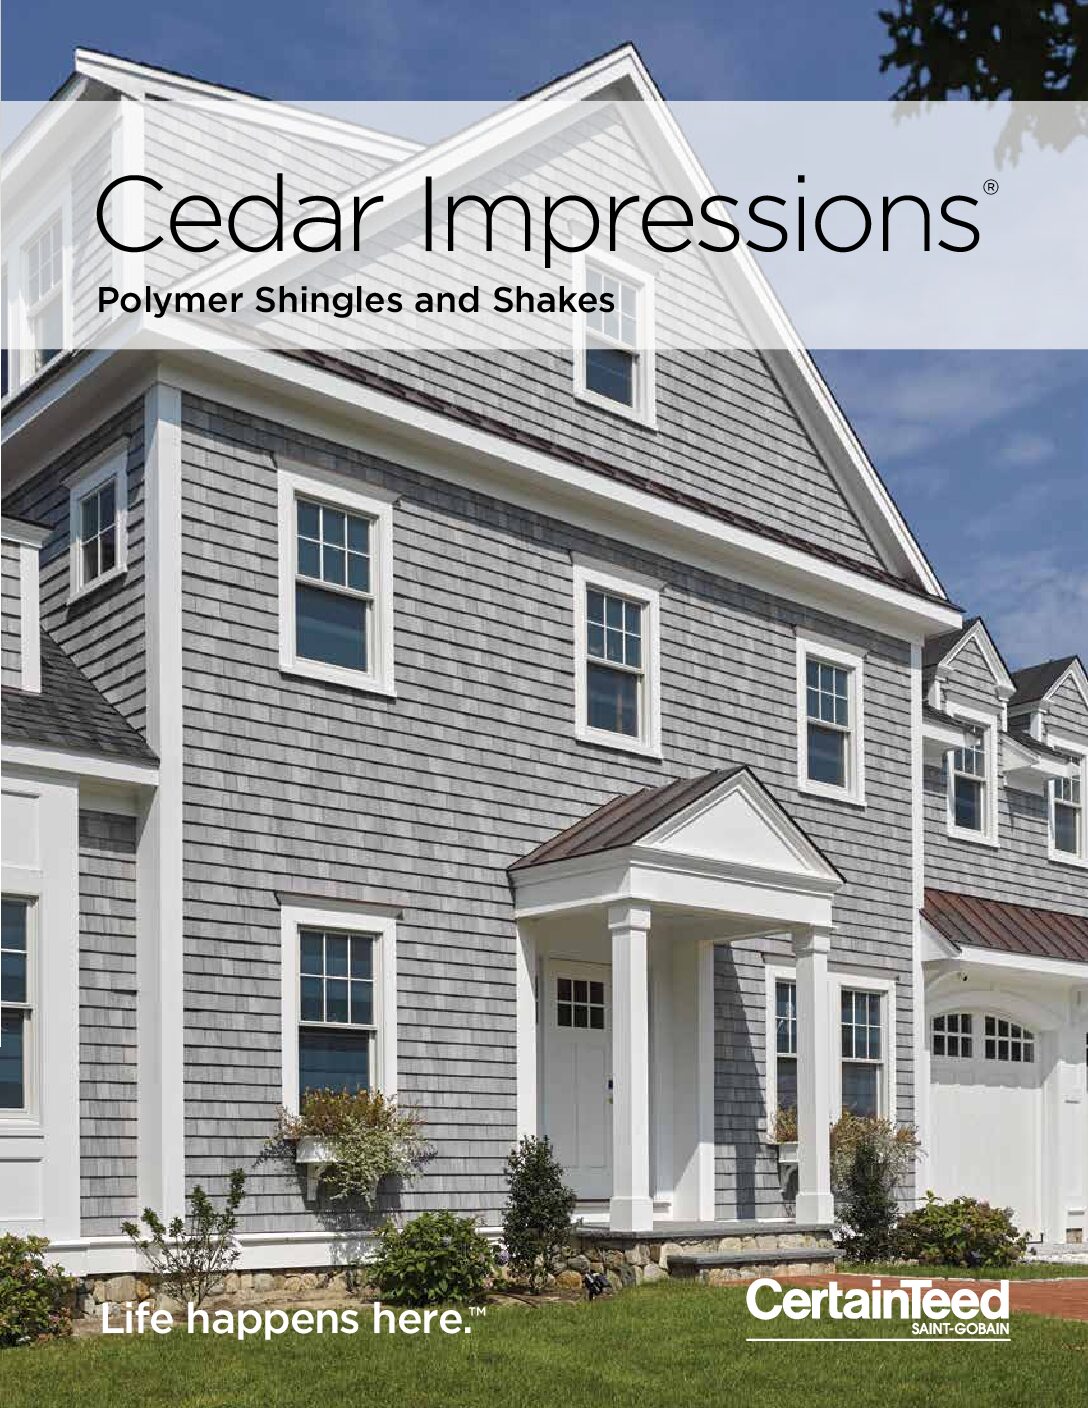 Certainteed Siding Cedar Impressions Brochure